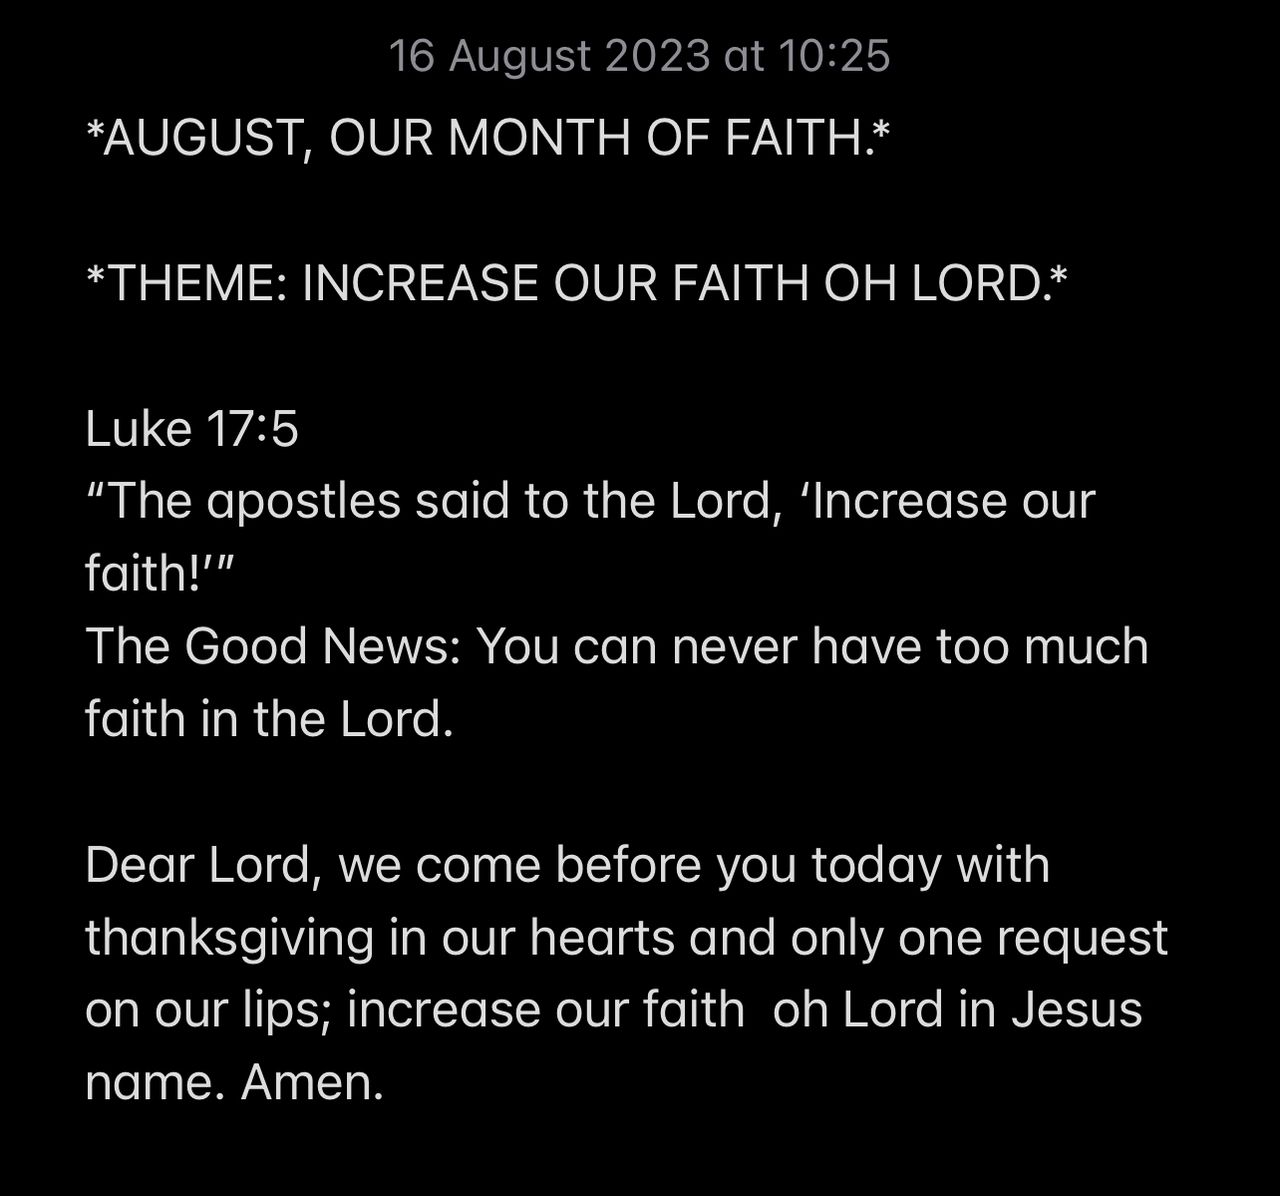 INCREASE OUR FAITH OH LORD.